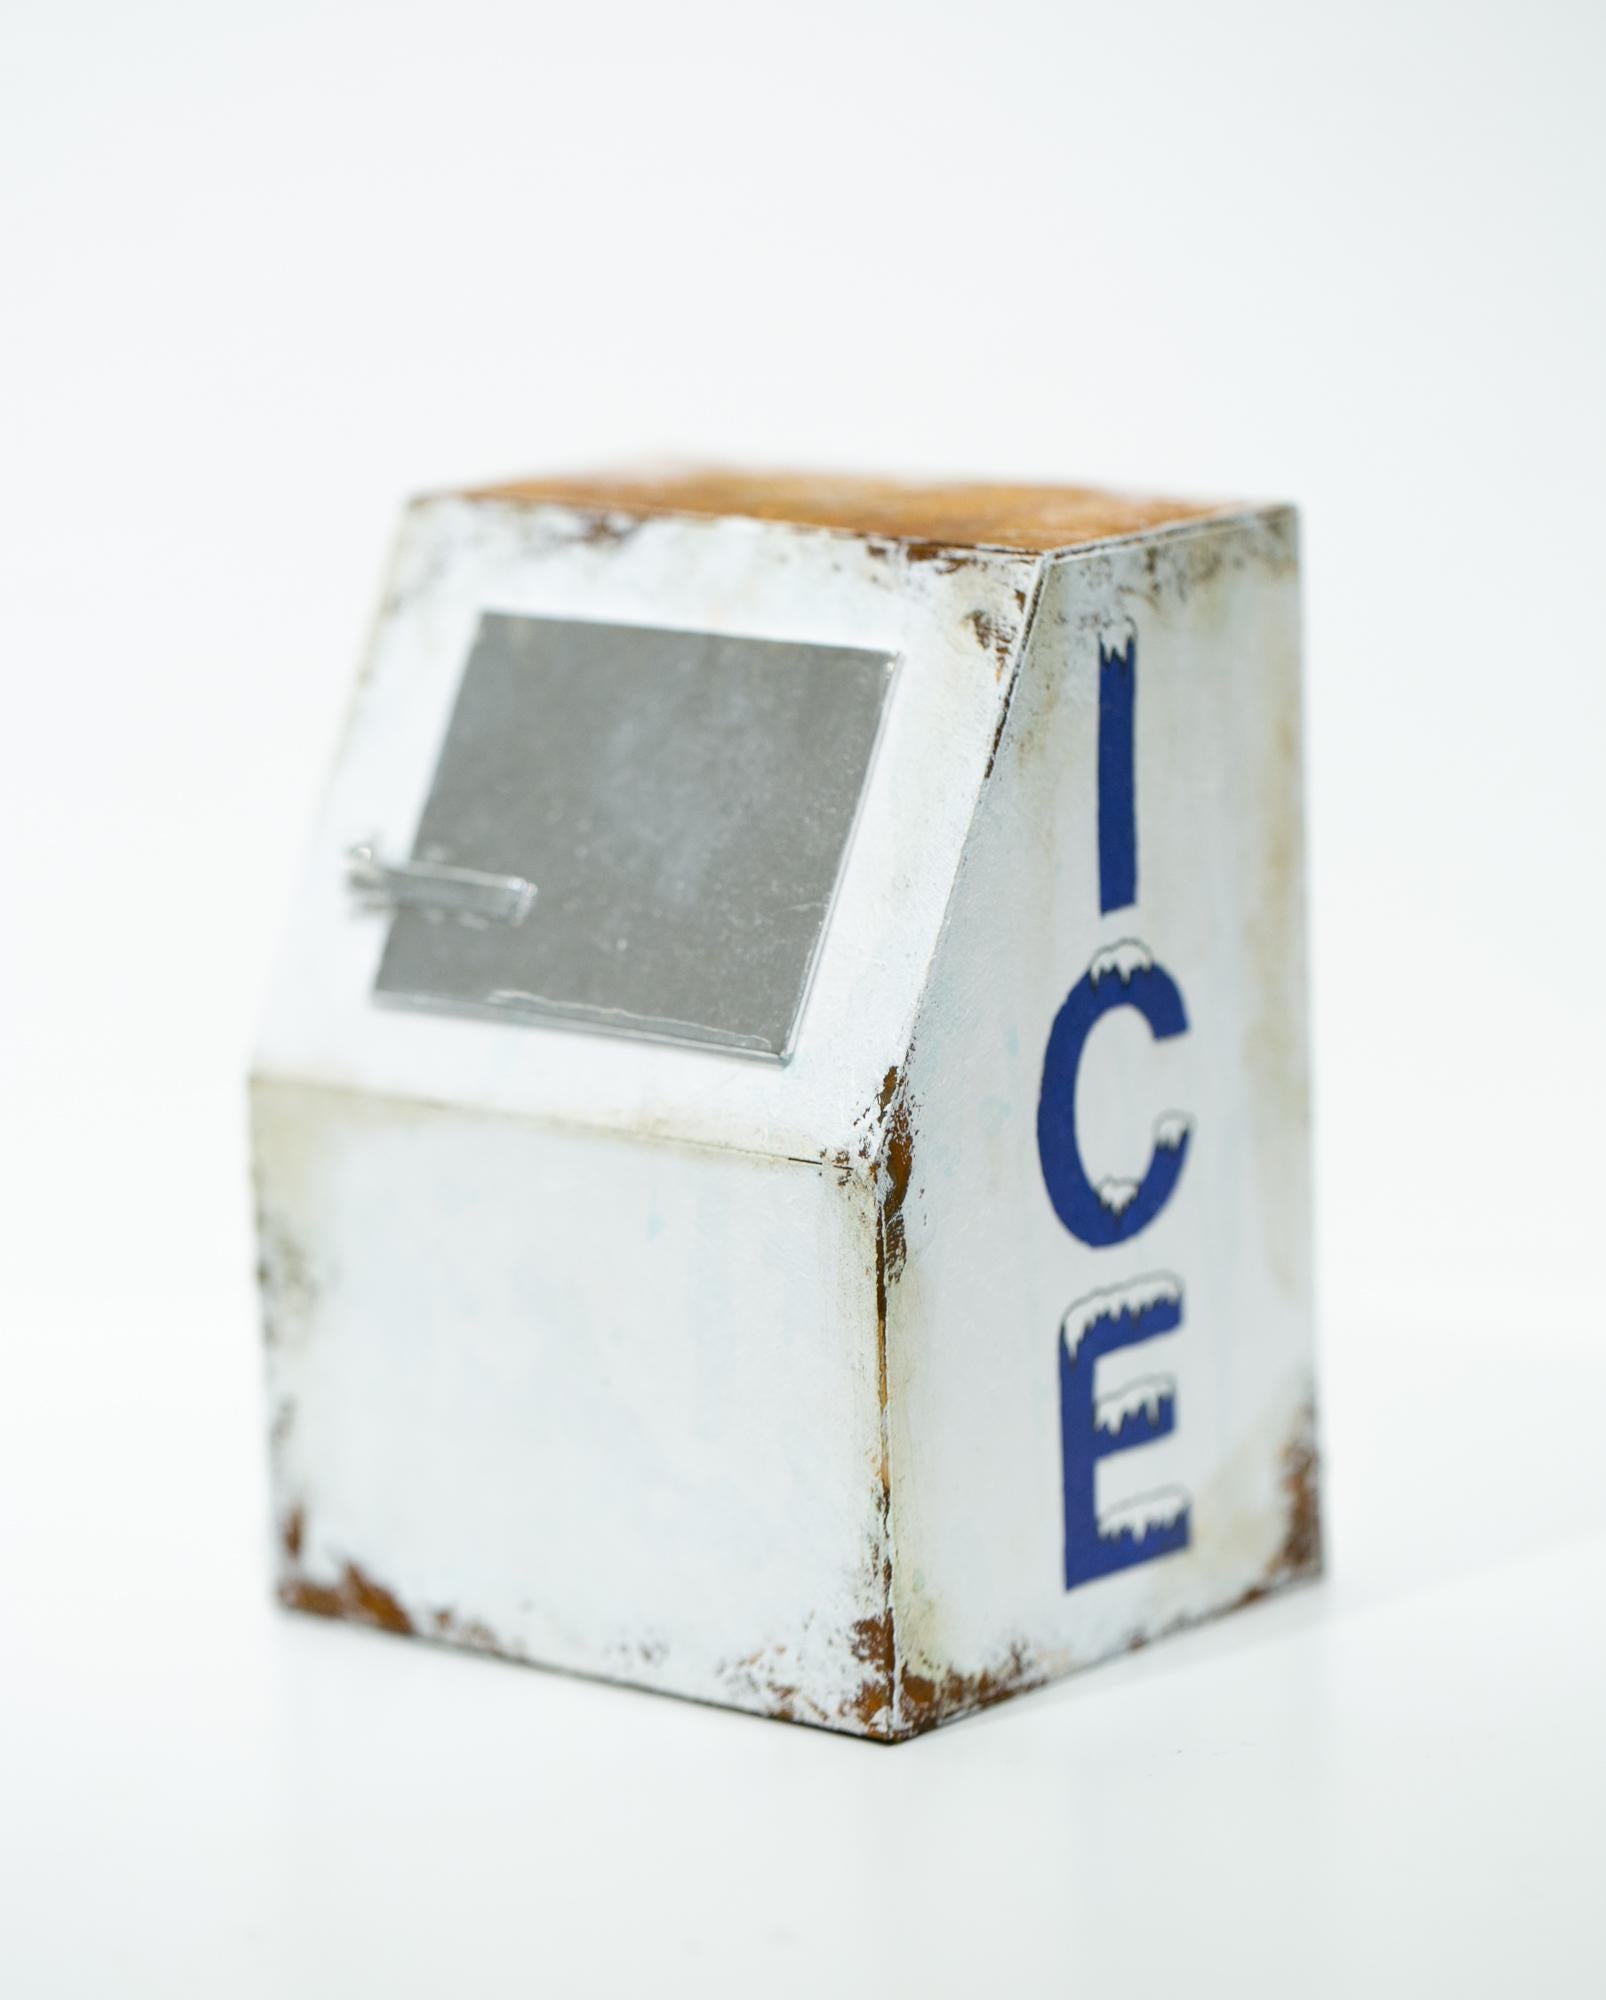 Drew Leshko Figurative Sculpture - "Ice Box, " Miniature, Architecture, Sculpture